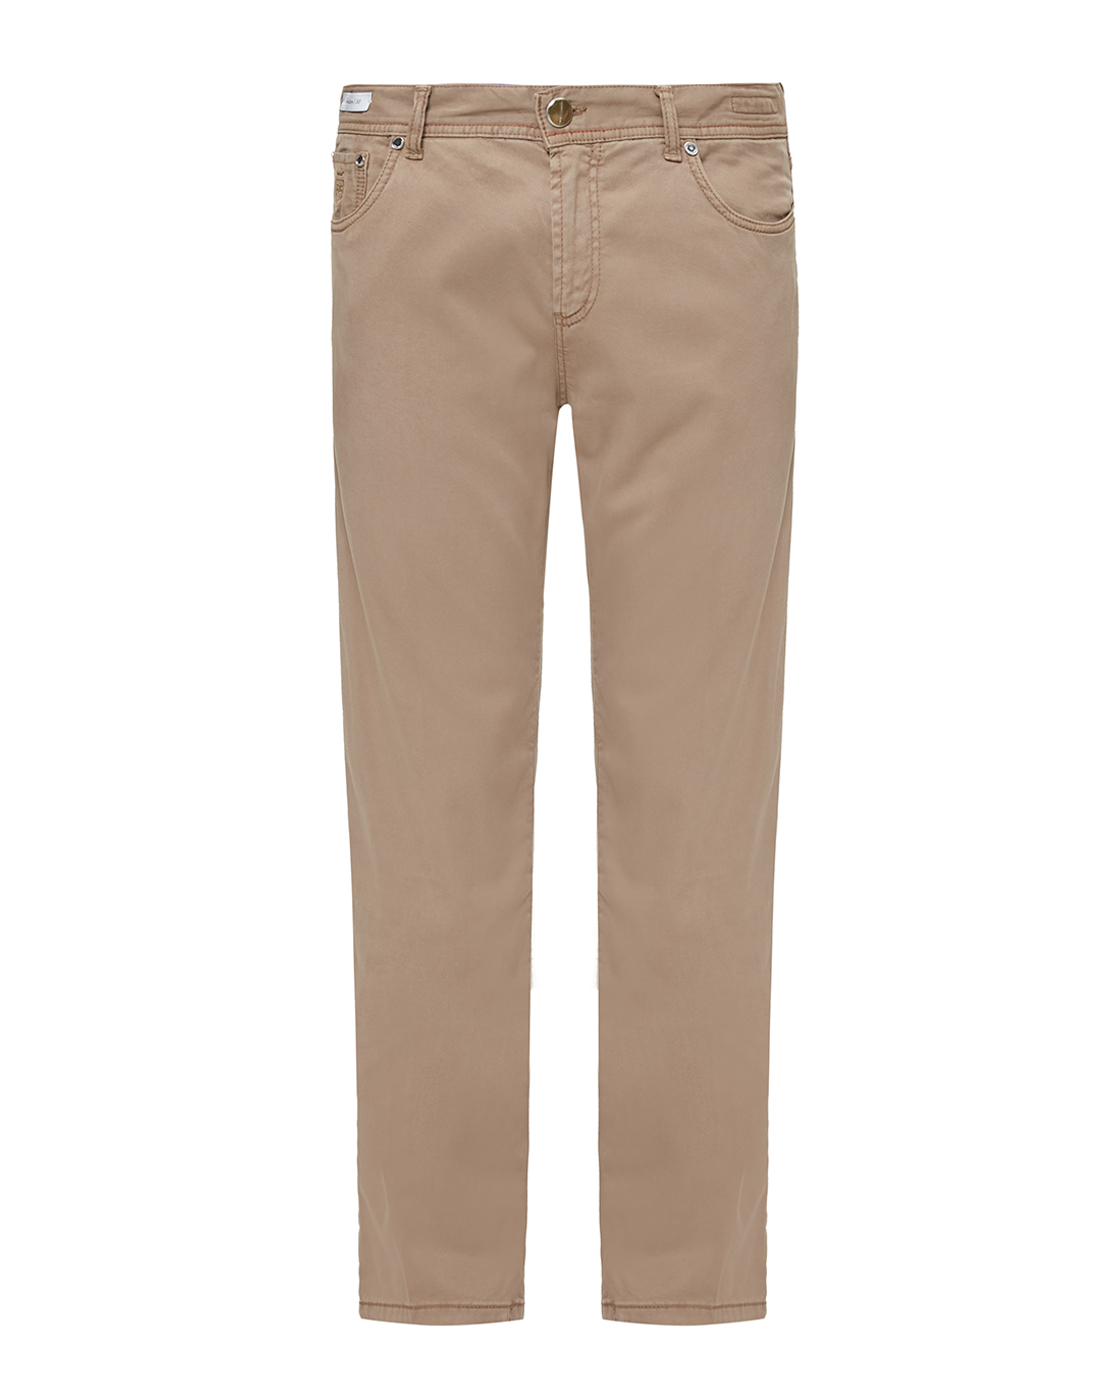 Мужские бежевые брюки Richard J. Brown ST166.115-1